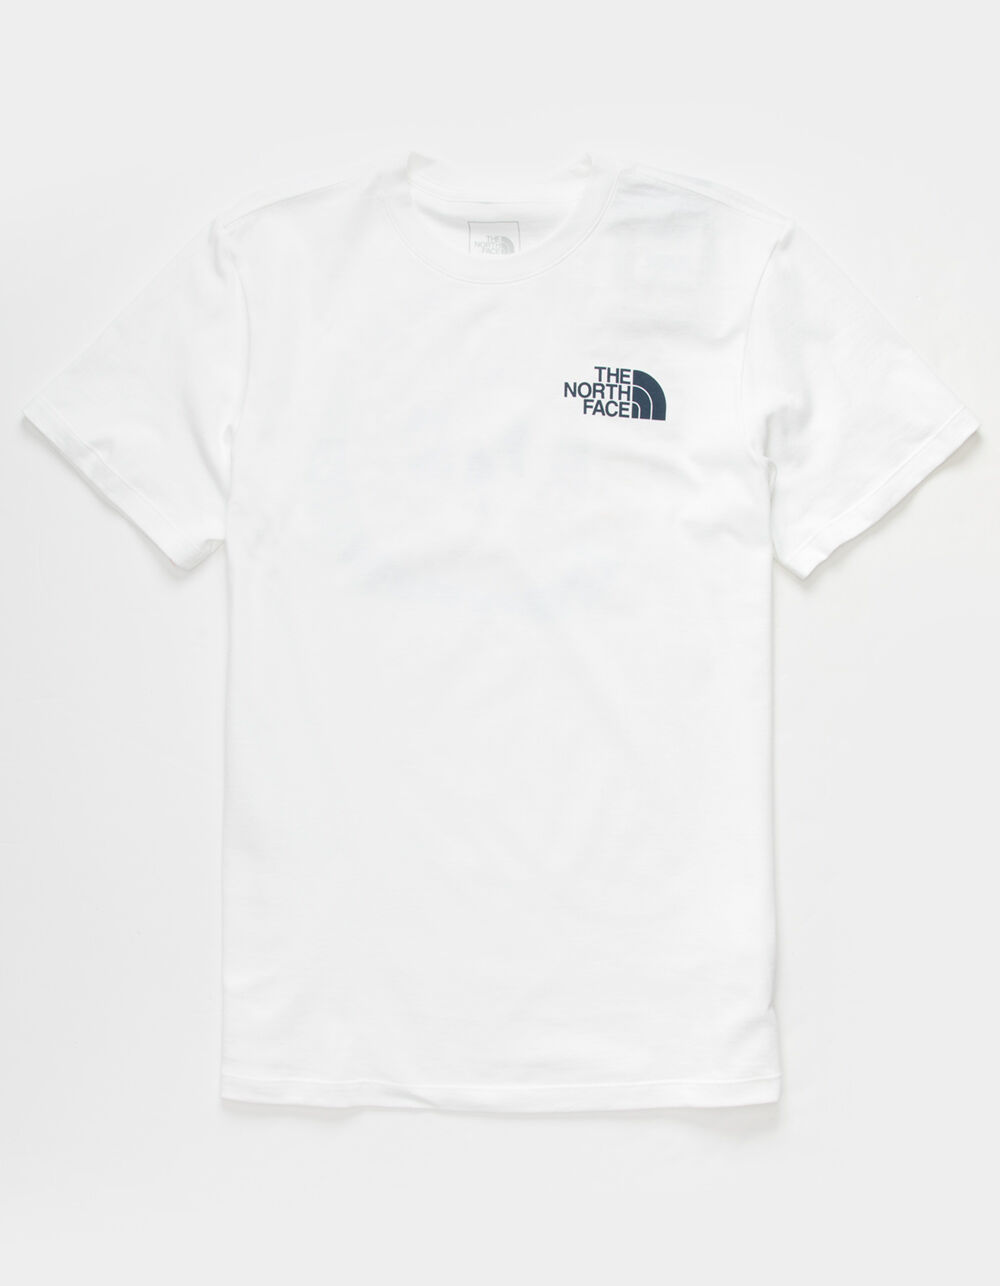 THE NORTH FACE Hiker Evolution Mens T-Shirt - WHITE | Tillys